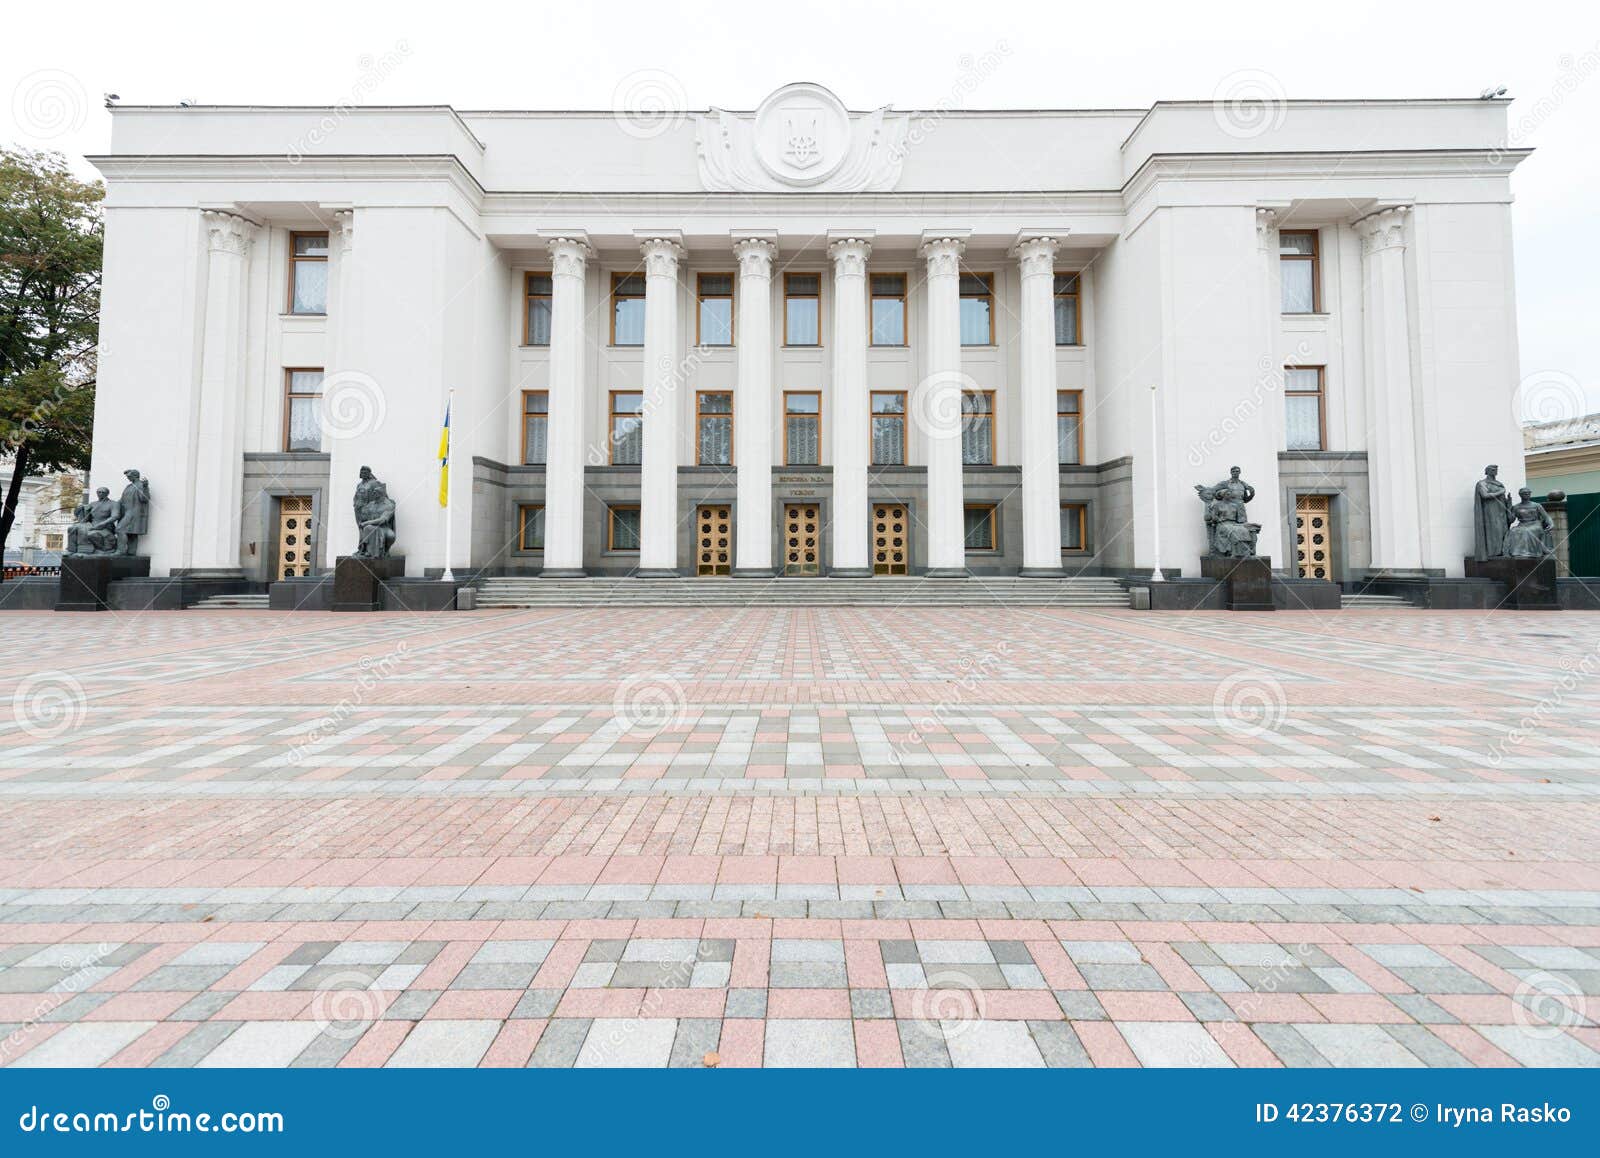 parliament of ukraine (verkhovna rada) in kiev, ukraine